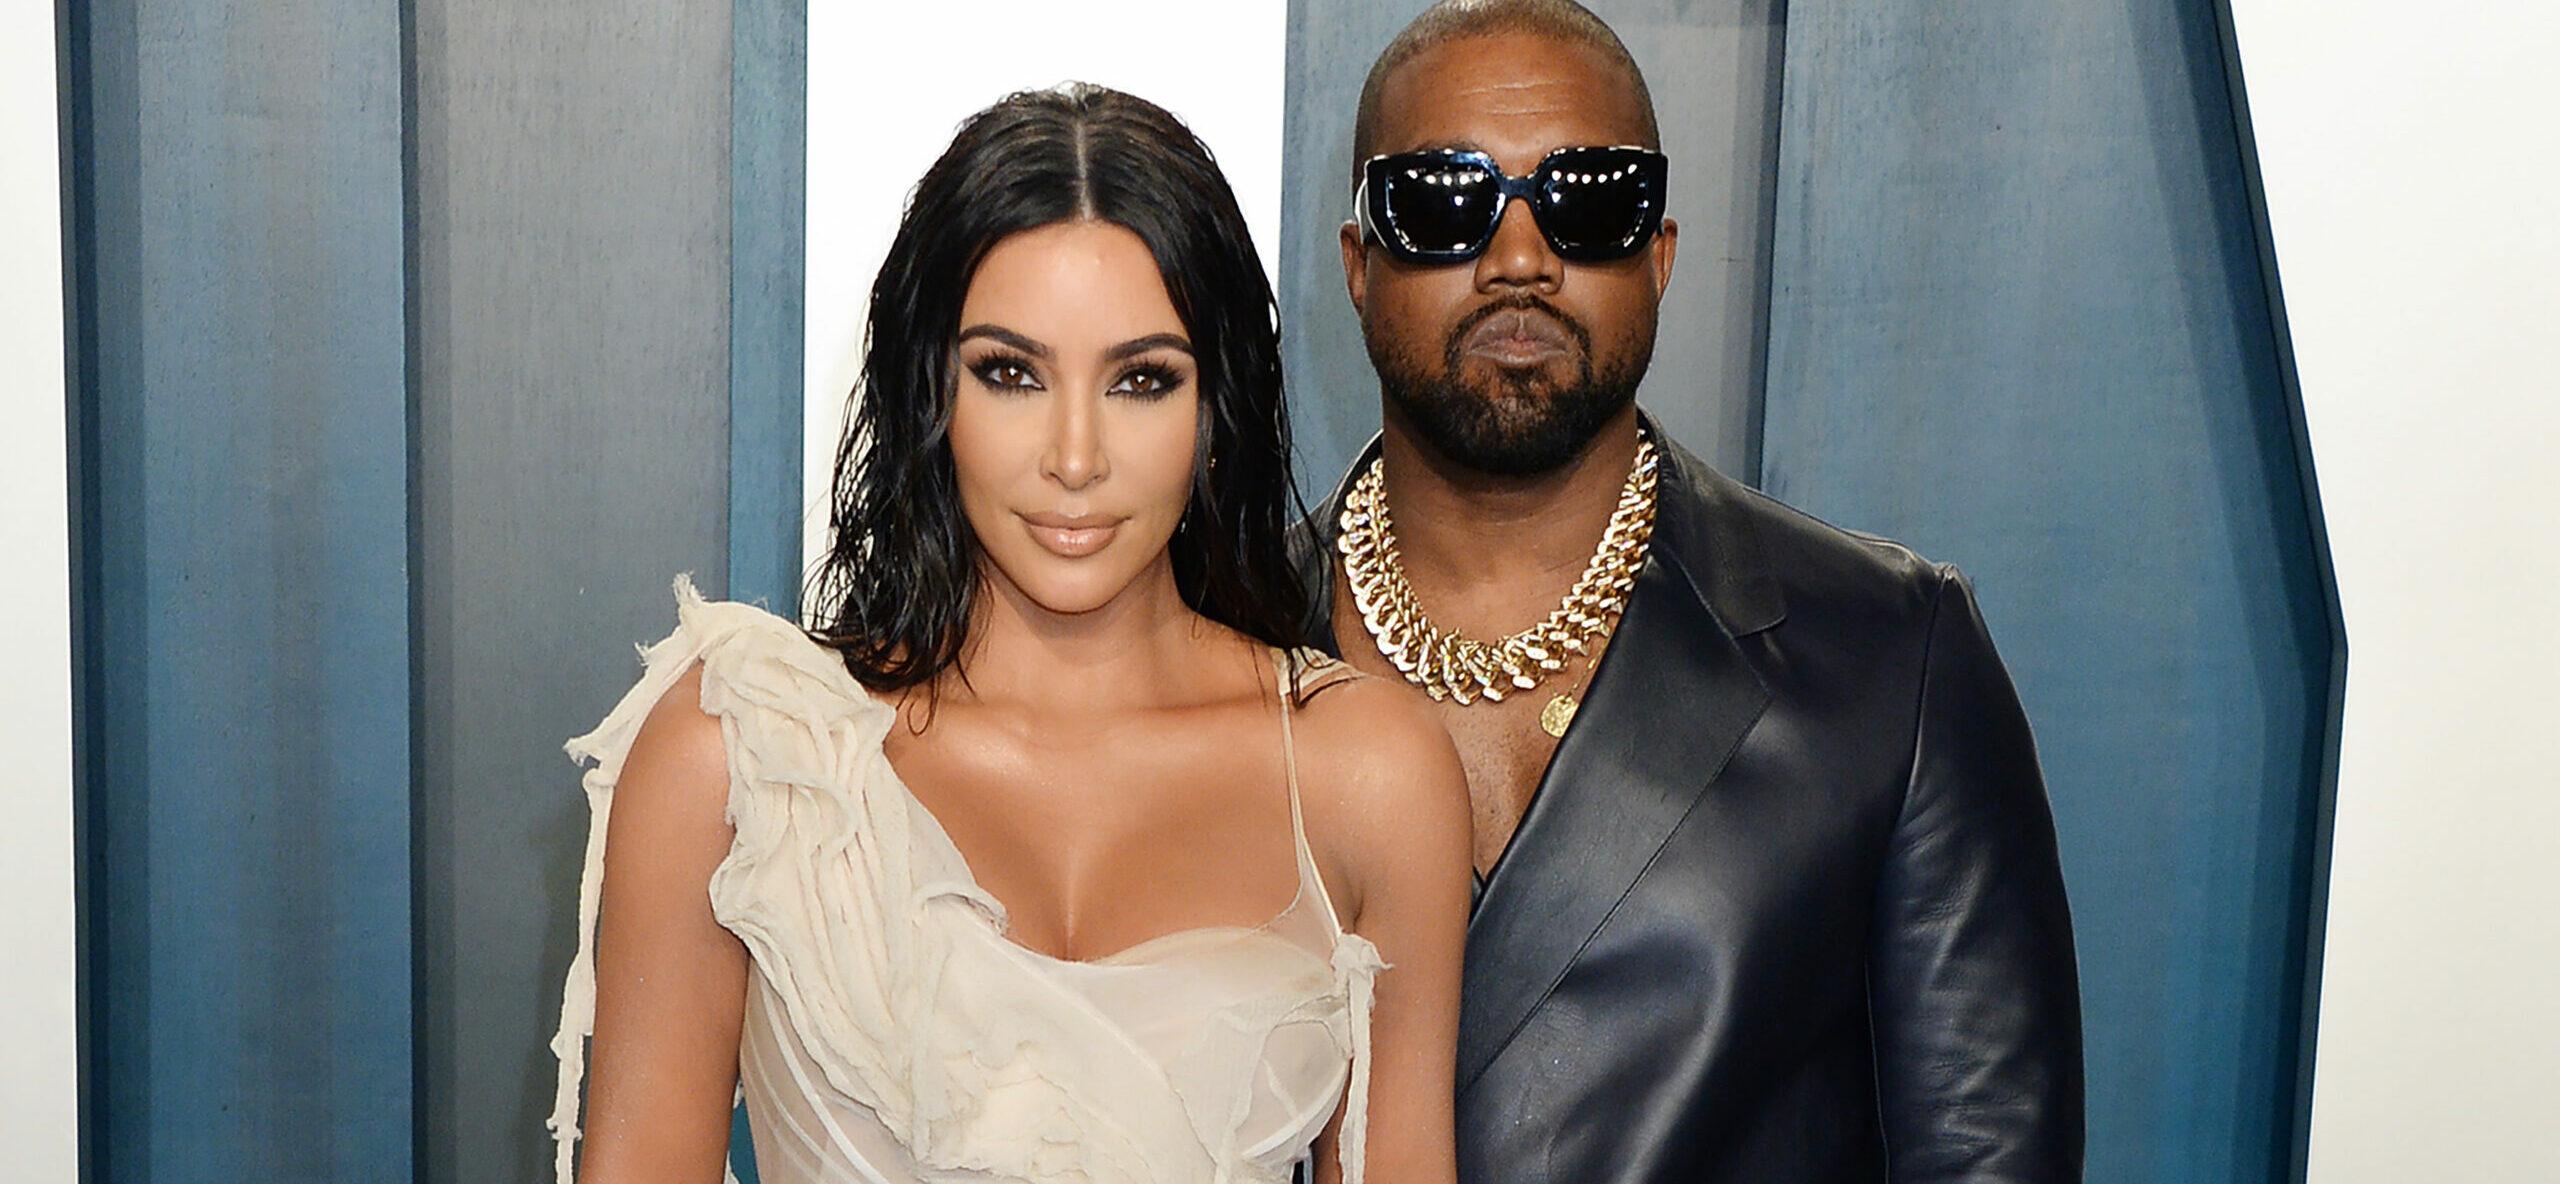 Kim Kardashian & Kanye West at a Vanity Fair Oscar Party